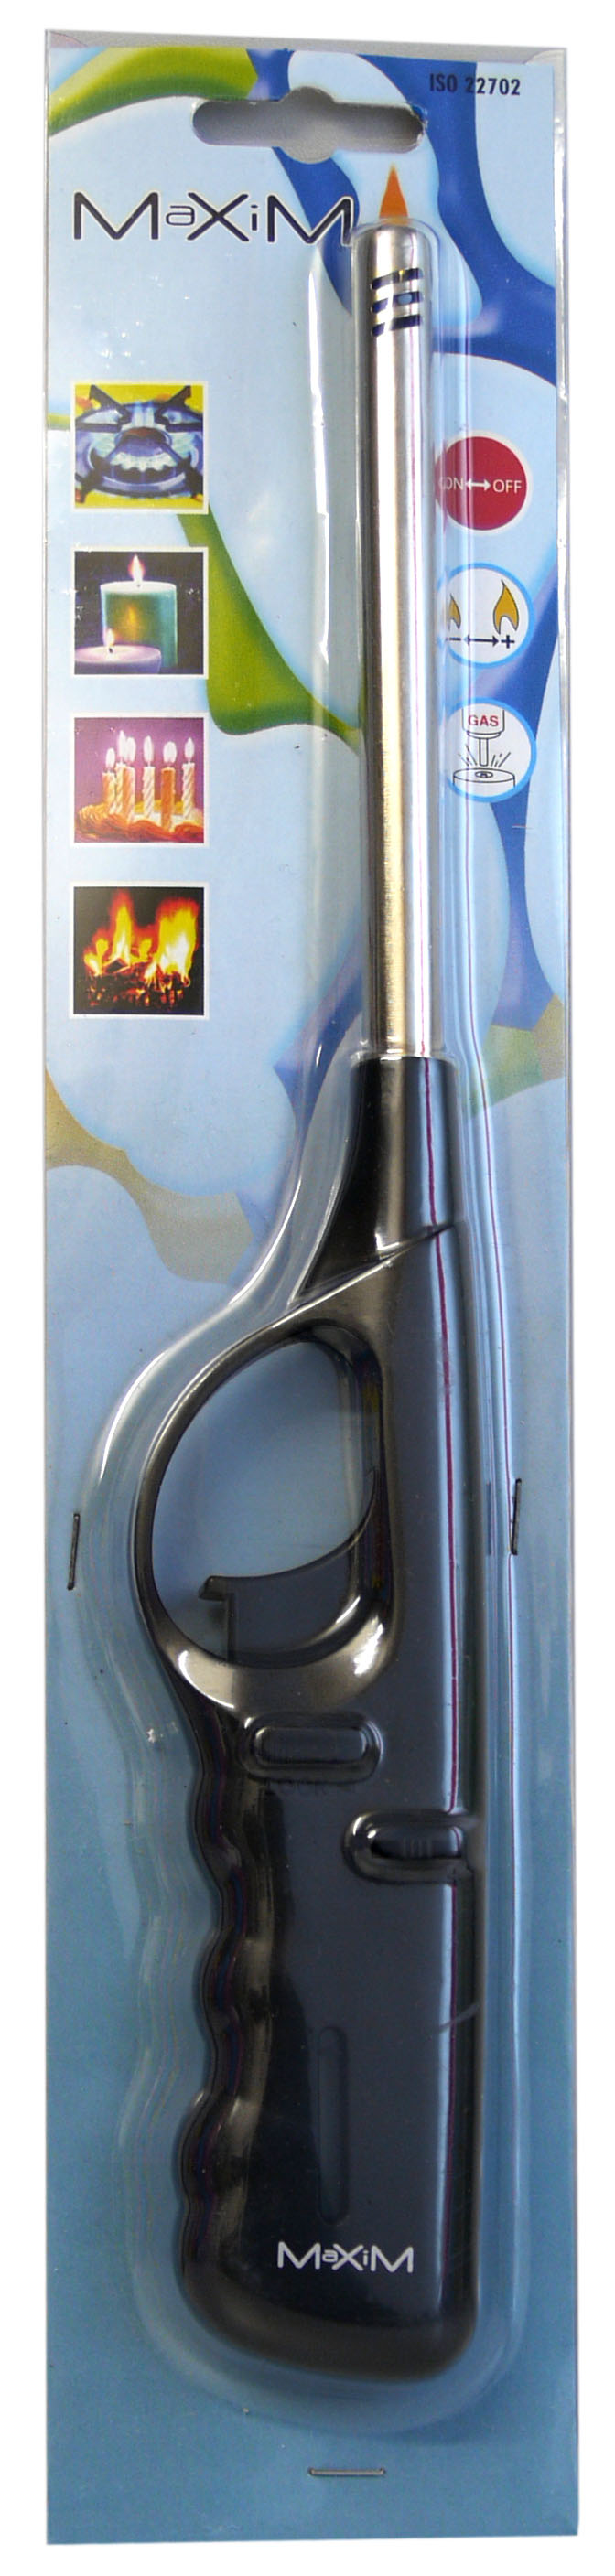 52174 - refill stick lighter, 27 cm, assorted colors